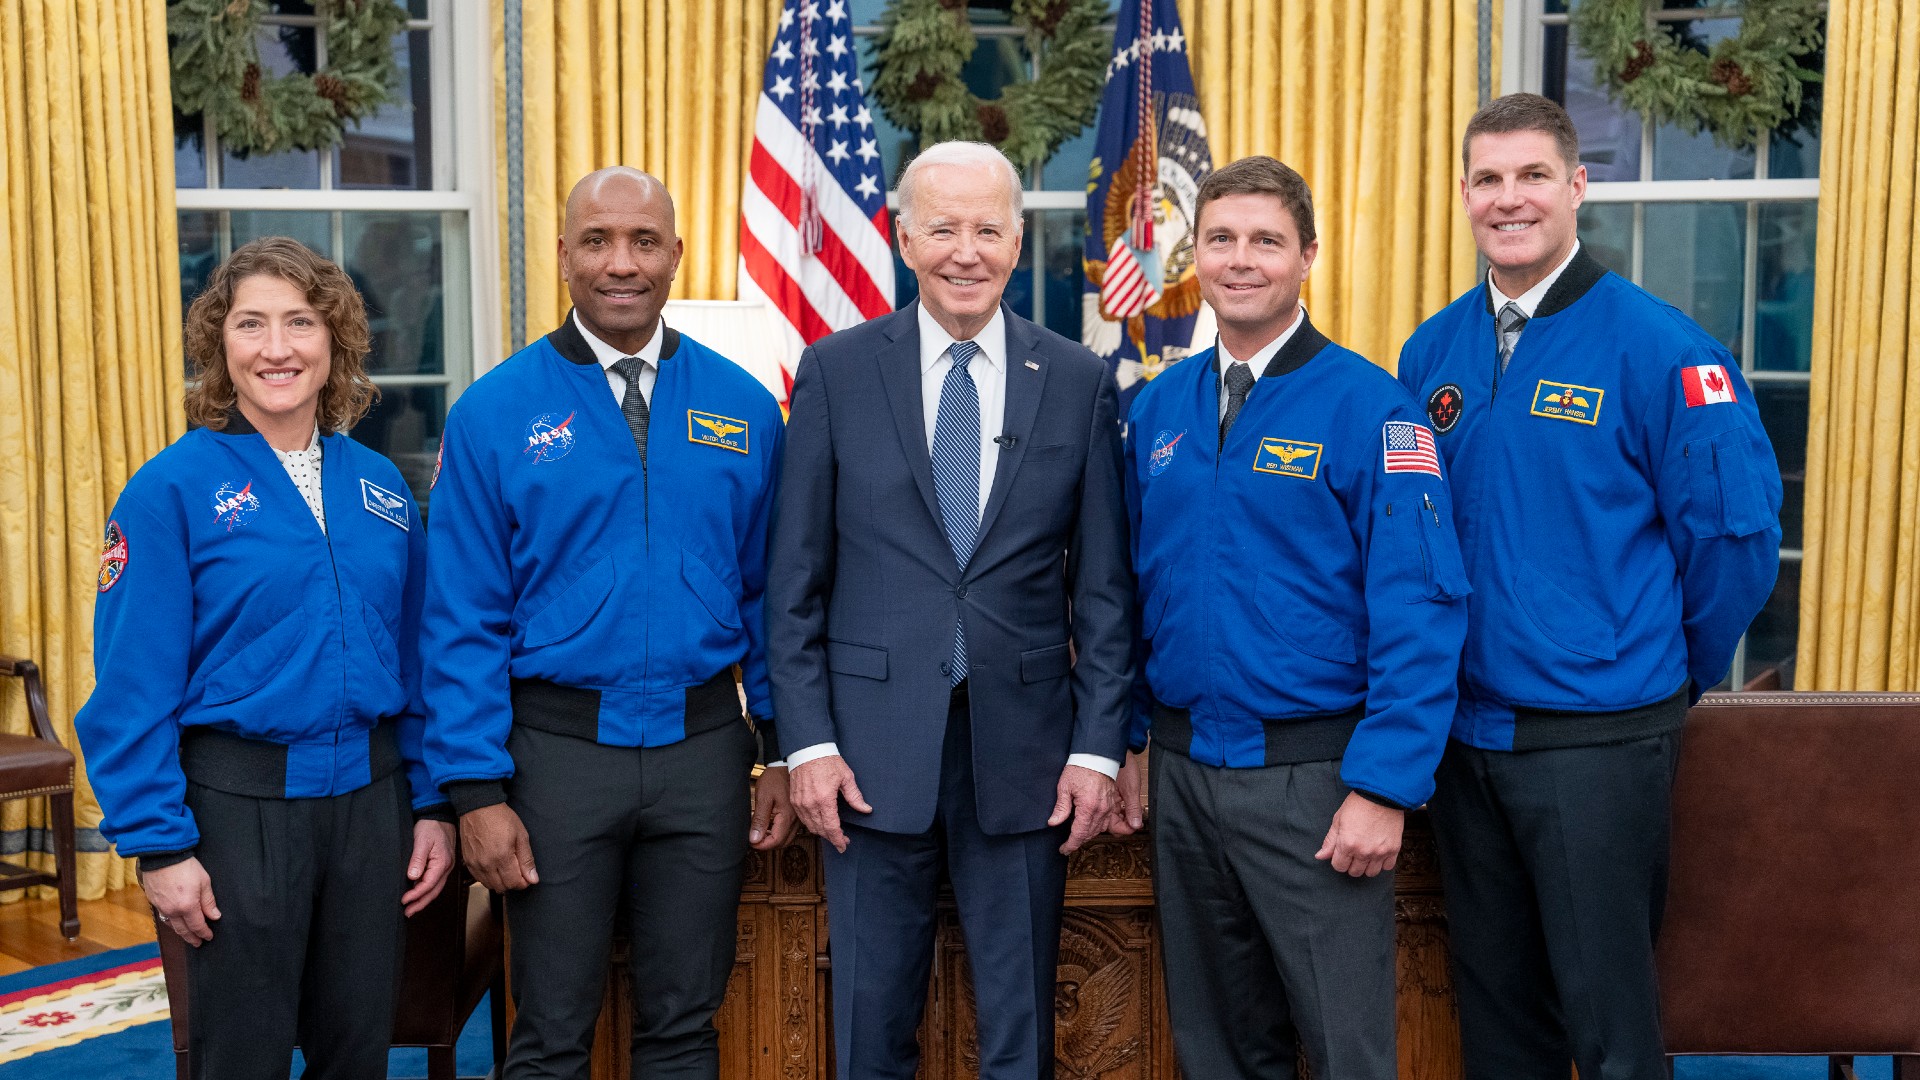 Artemis 2 moon astronauts discuss 21st-century moonshots with President Biden